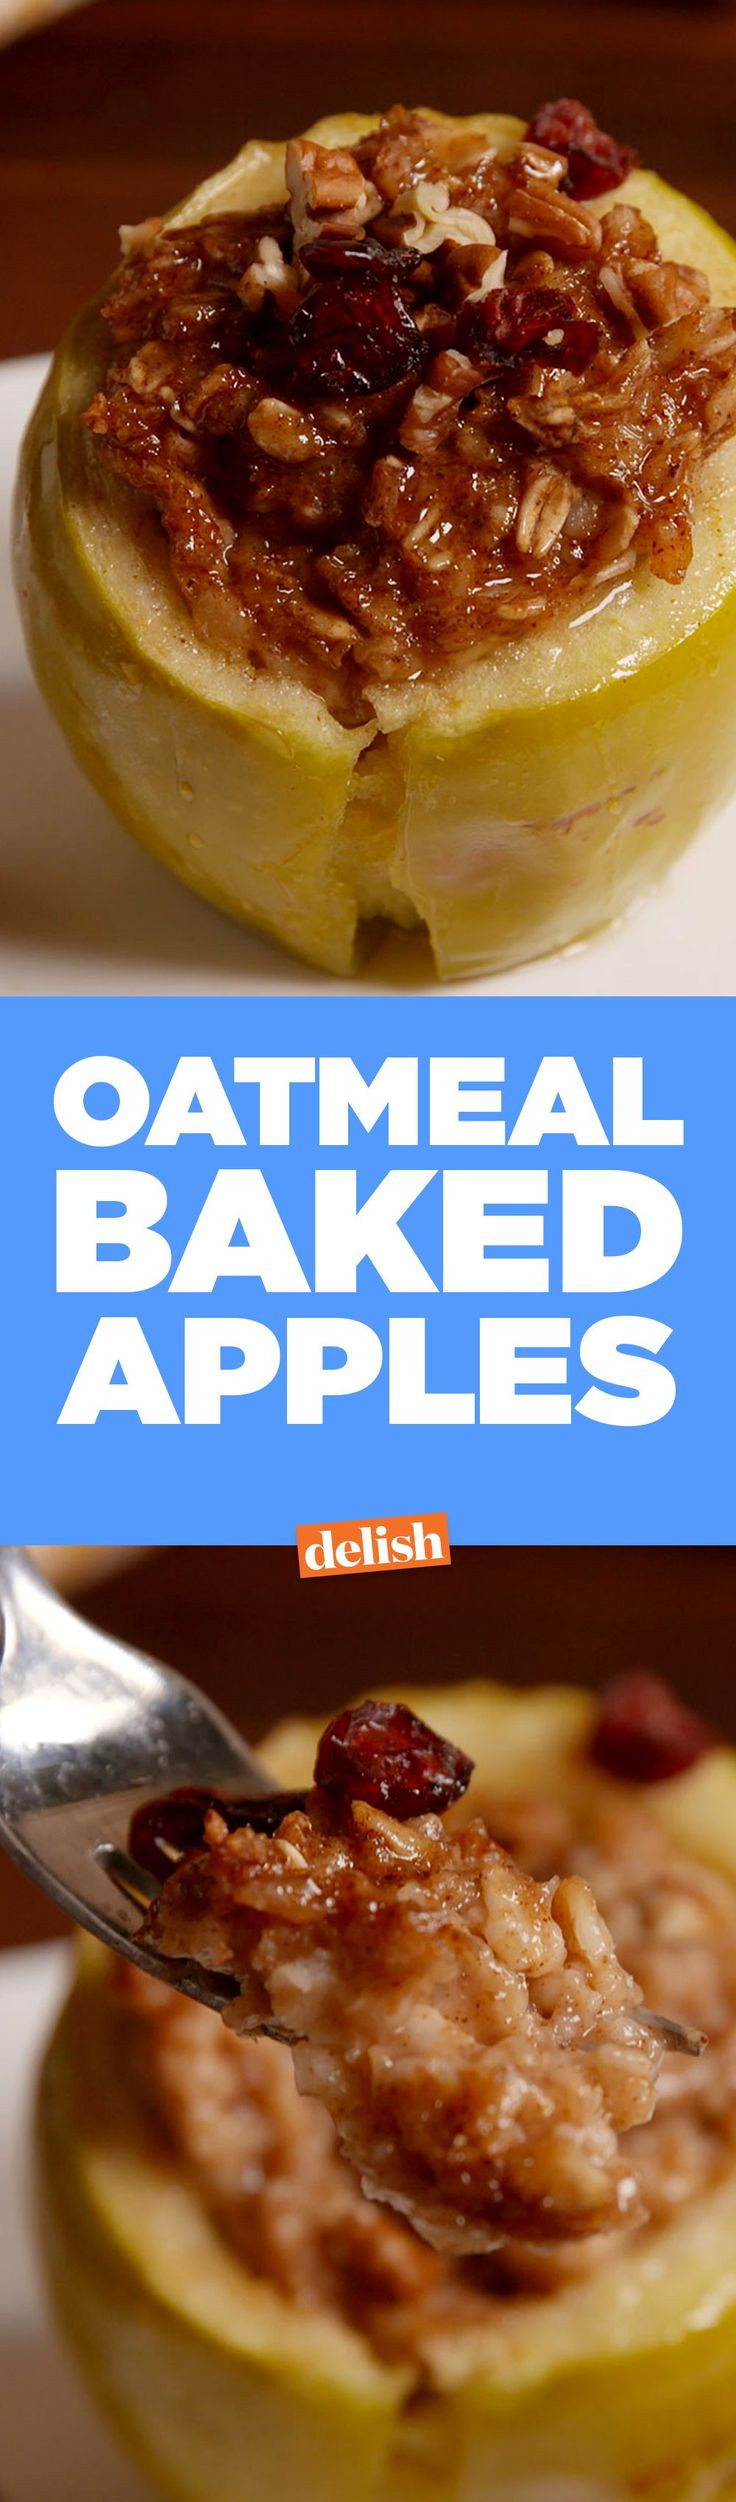 Healthy Apple Breakfast Recipes
 25 best ideas about Baked Apples on Pinterest